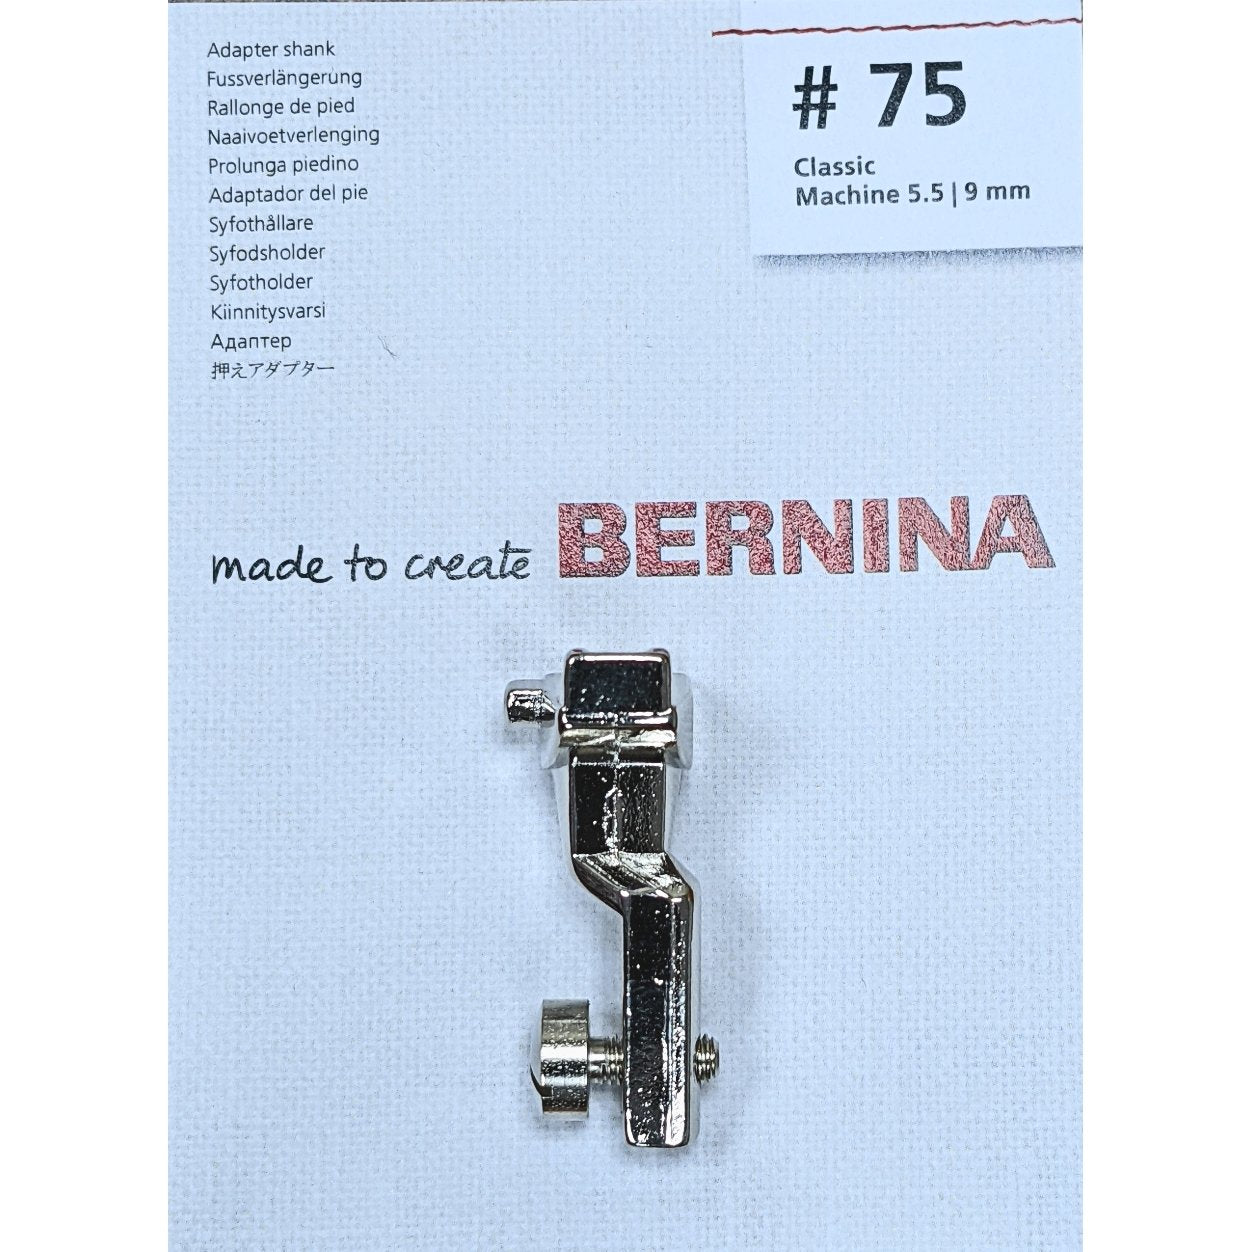 Bernina foot adaptor from Jaycotts Sewing Supplies